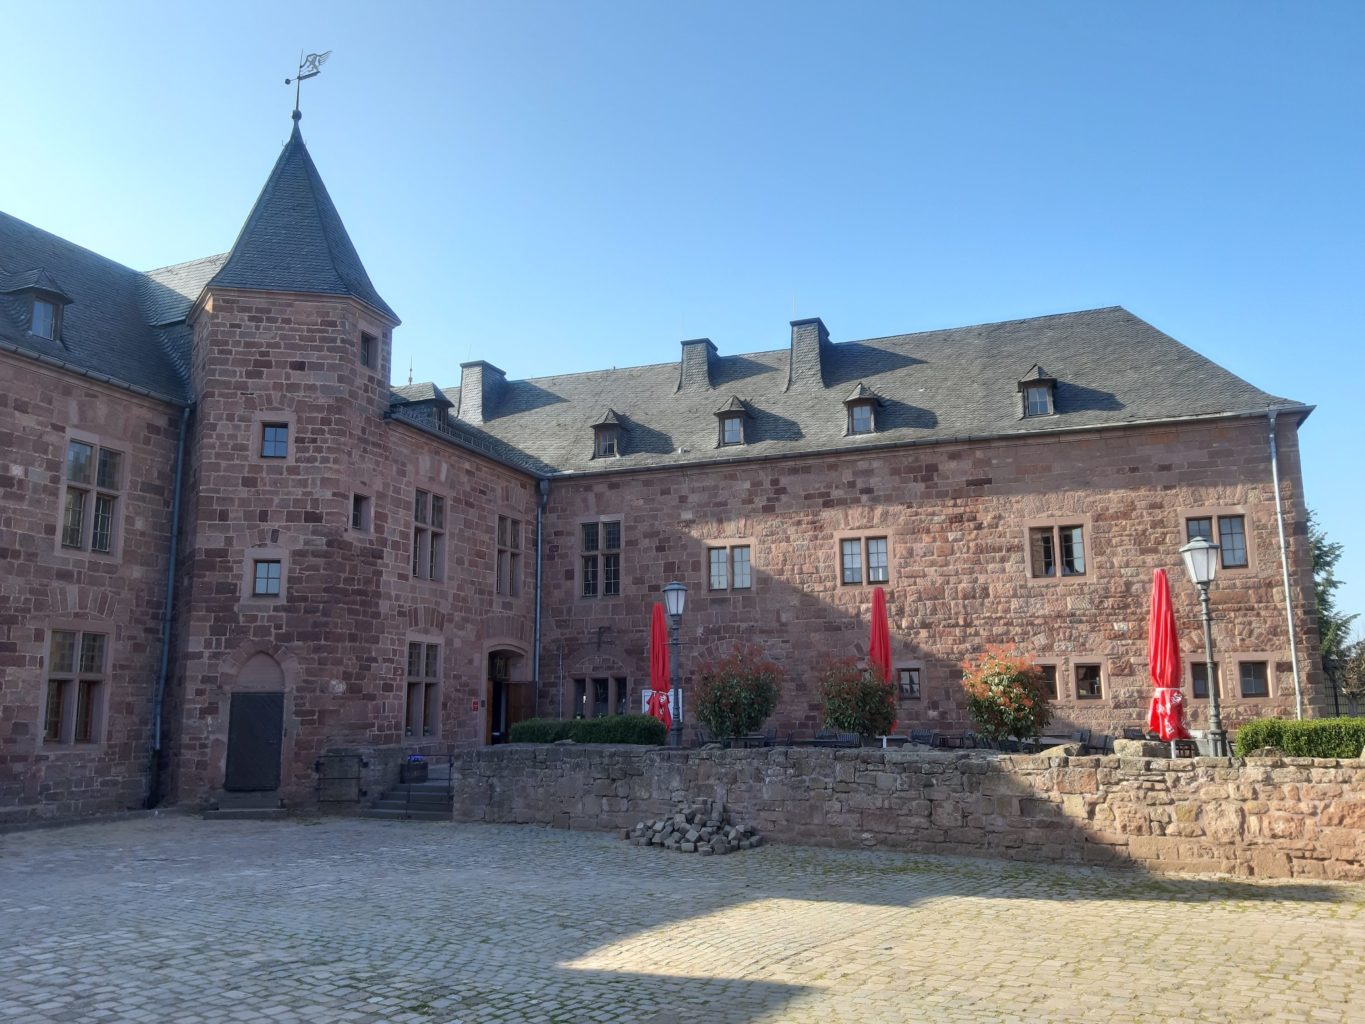 Restaurant der Burg Nideggen